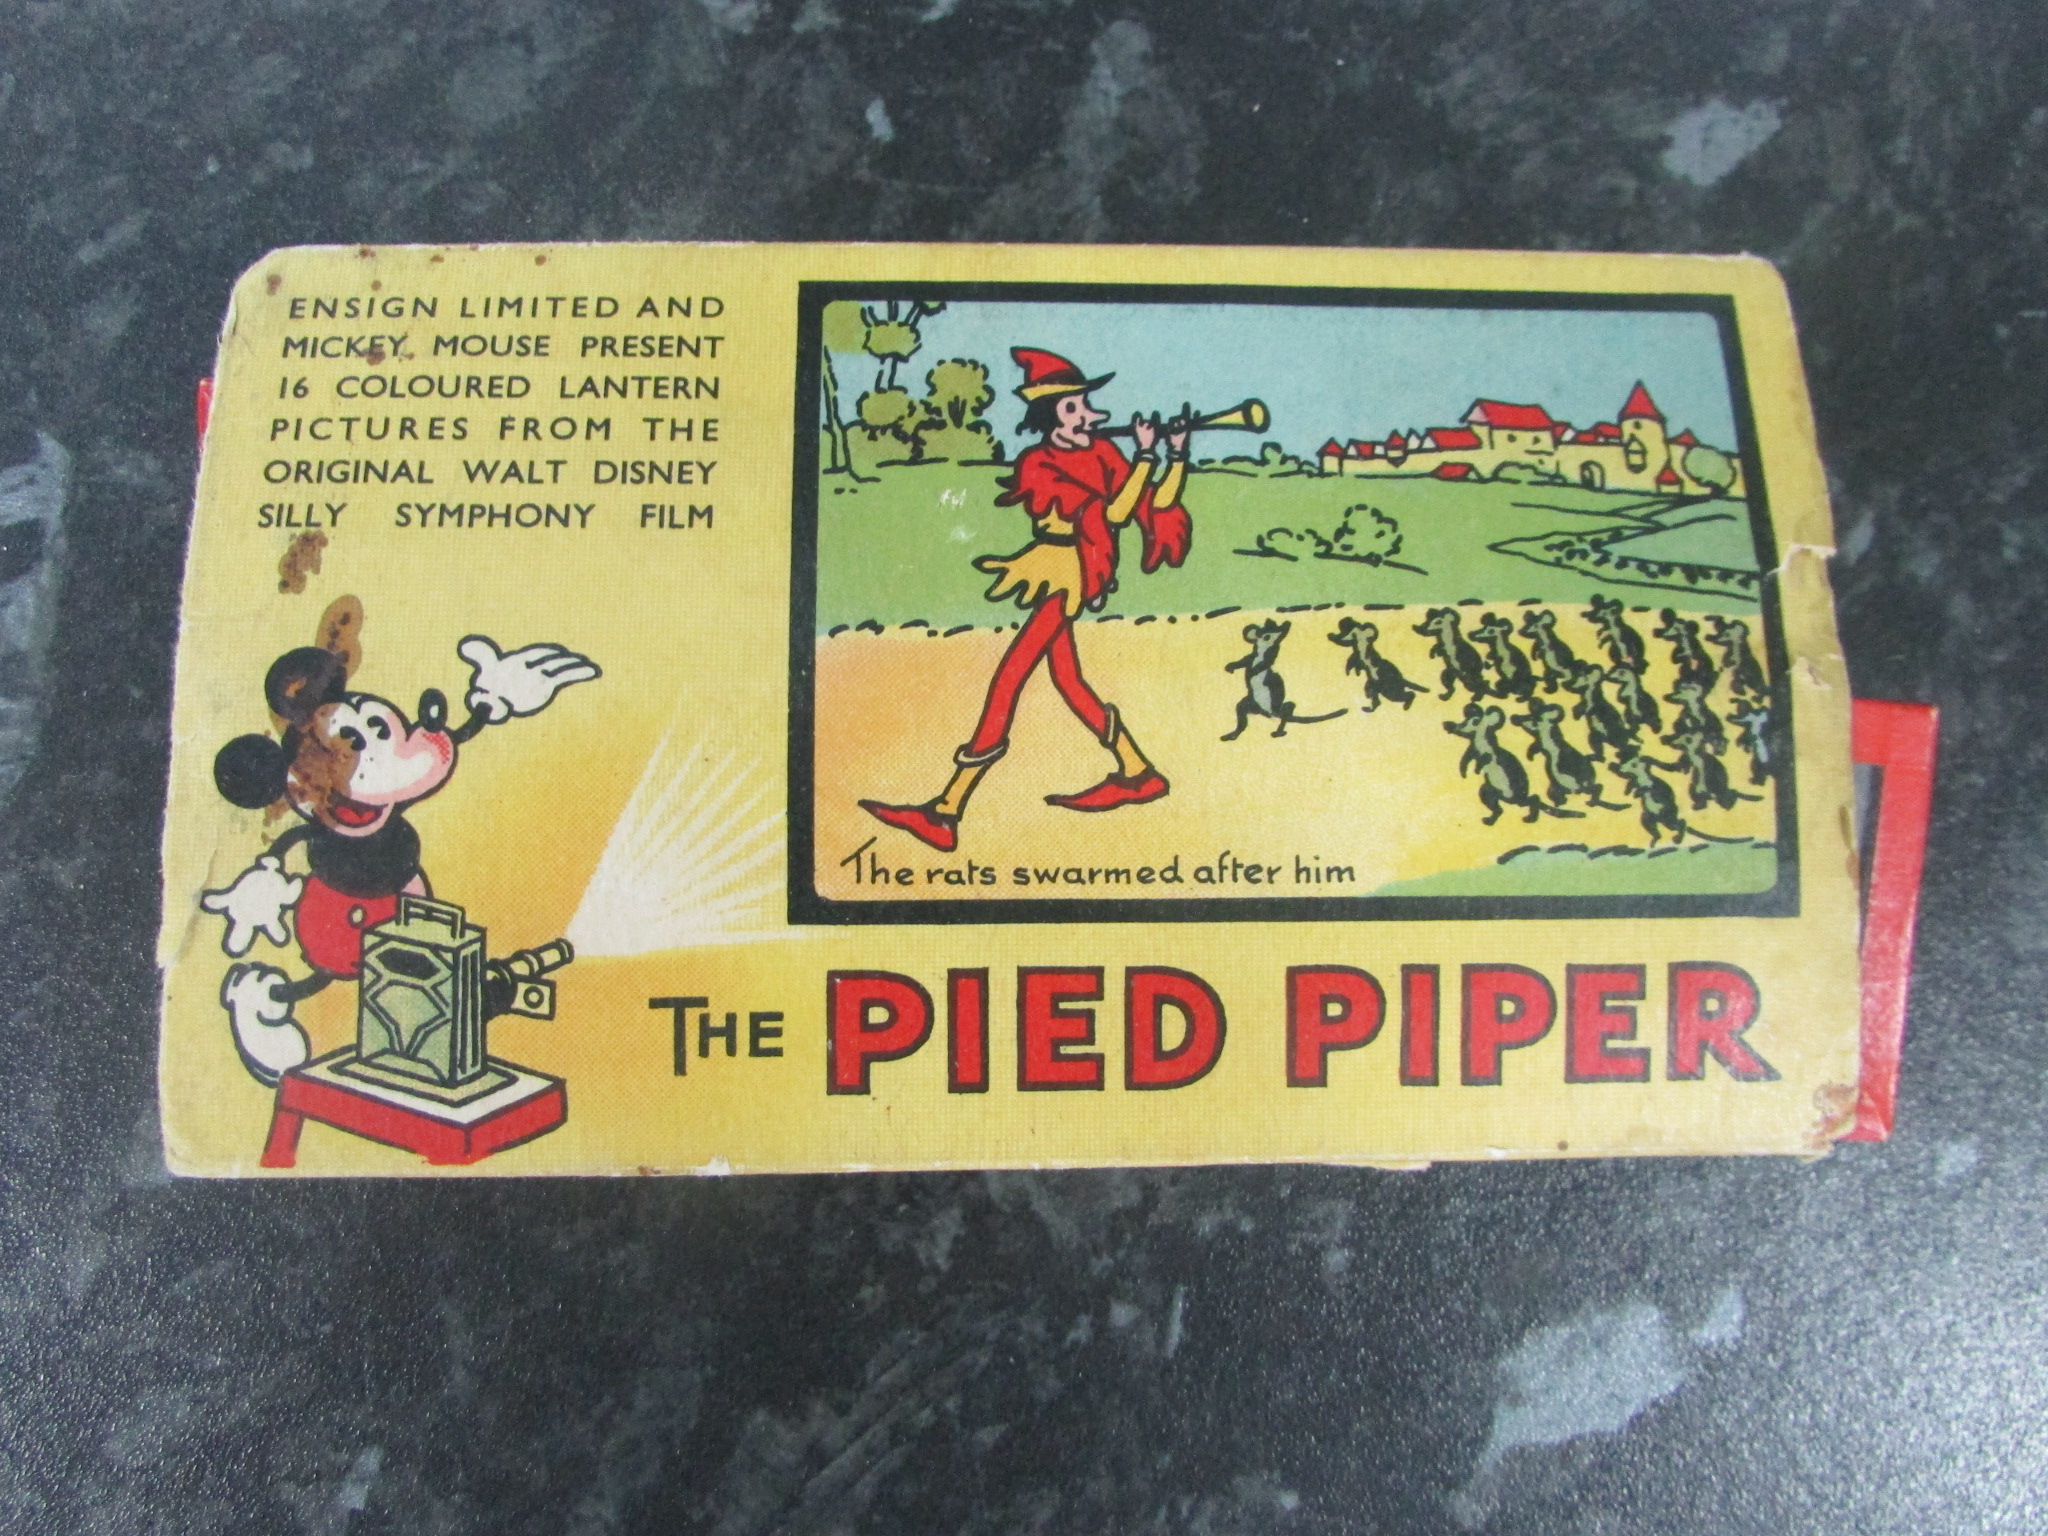 Pied Piper slides